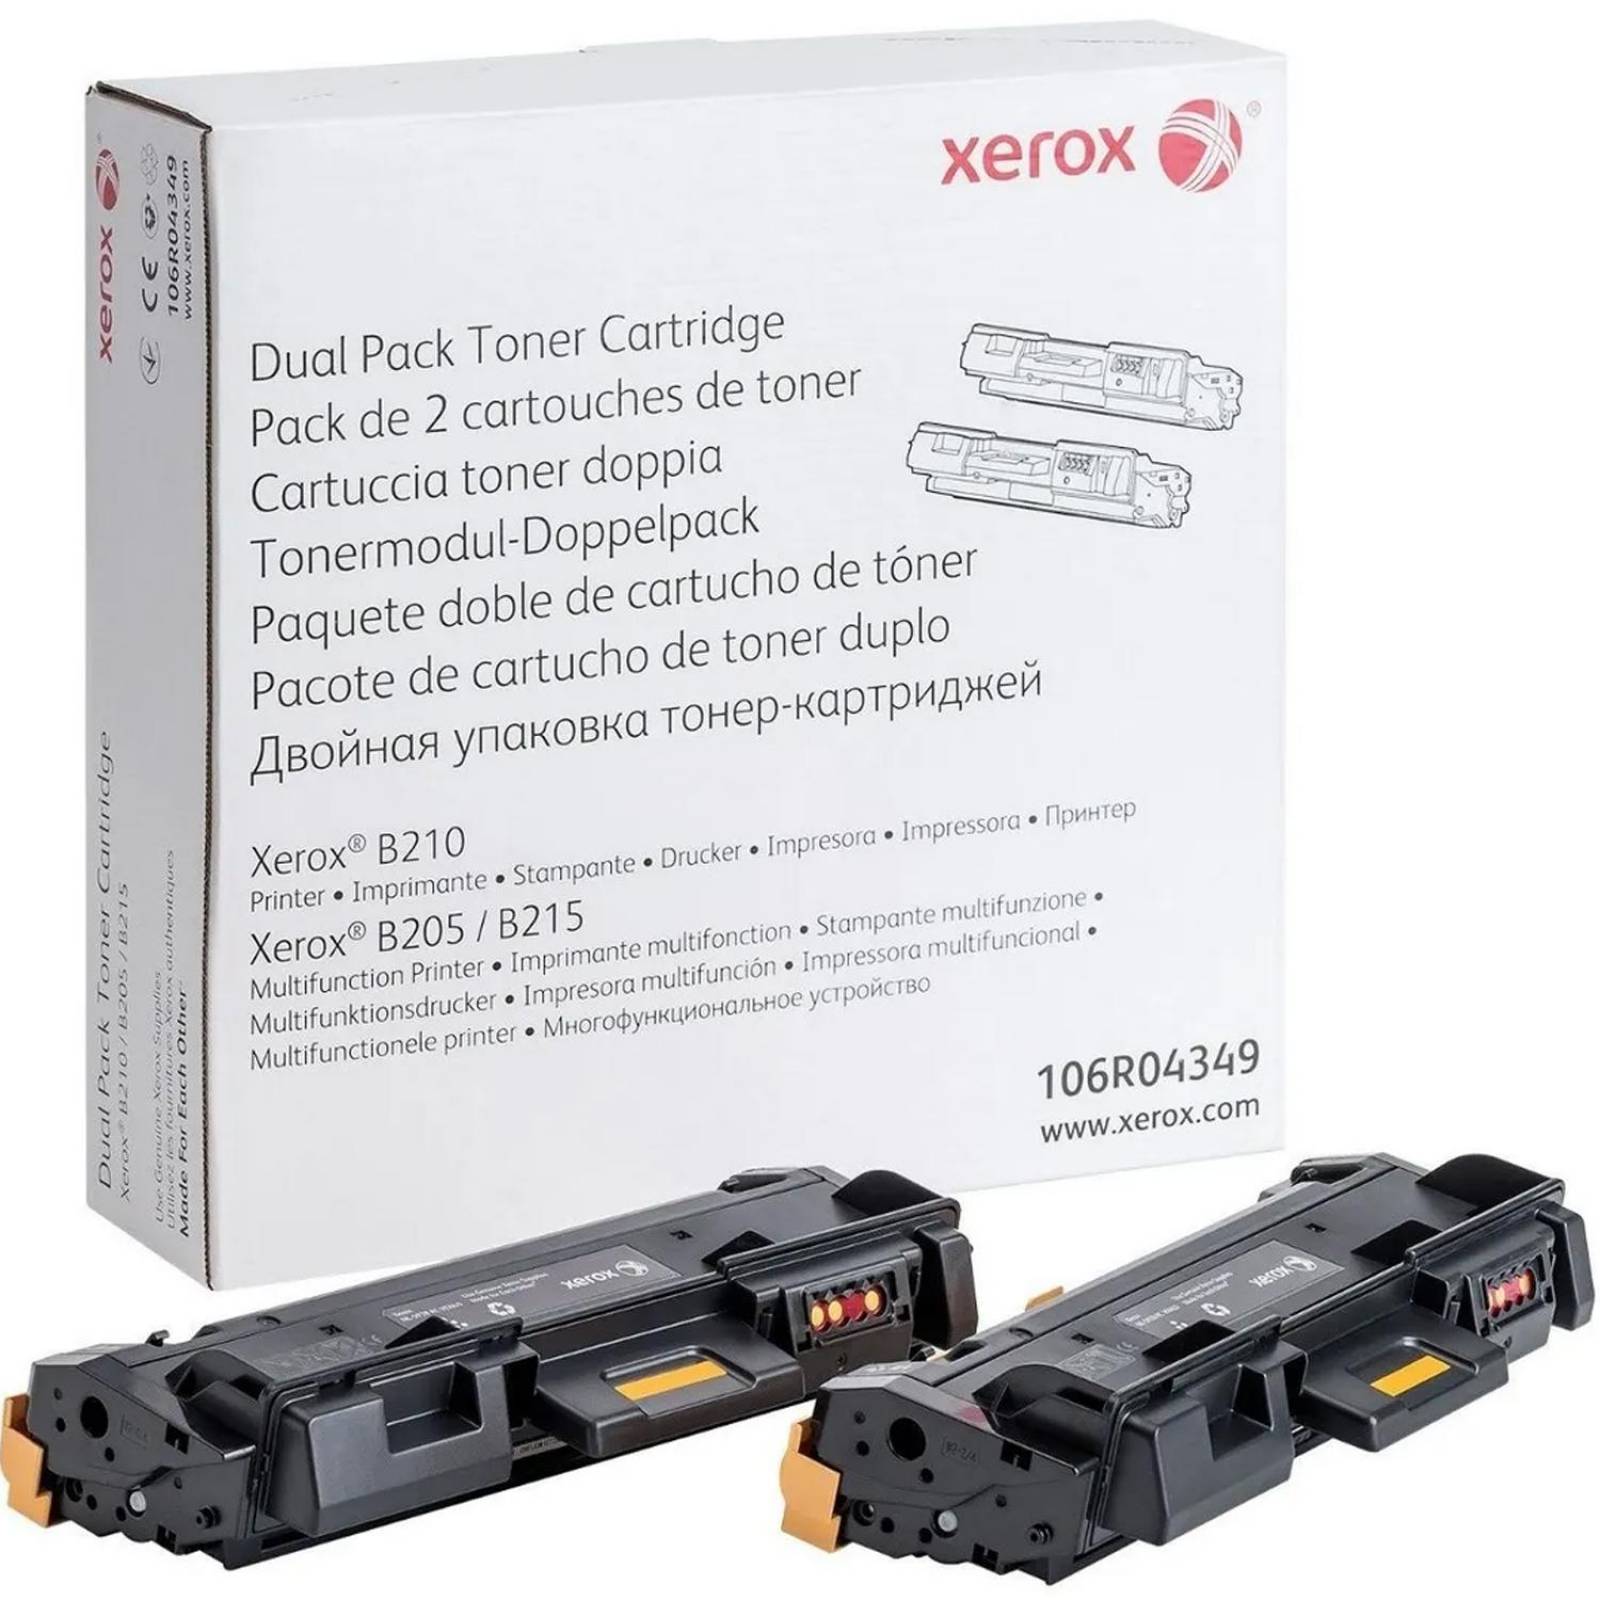 Toner Kit 2 XEROX Work Center Compatible B210 B205 B215 106R04349 